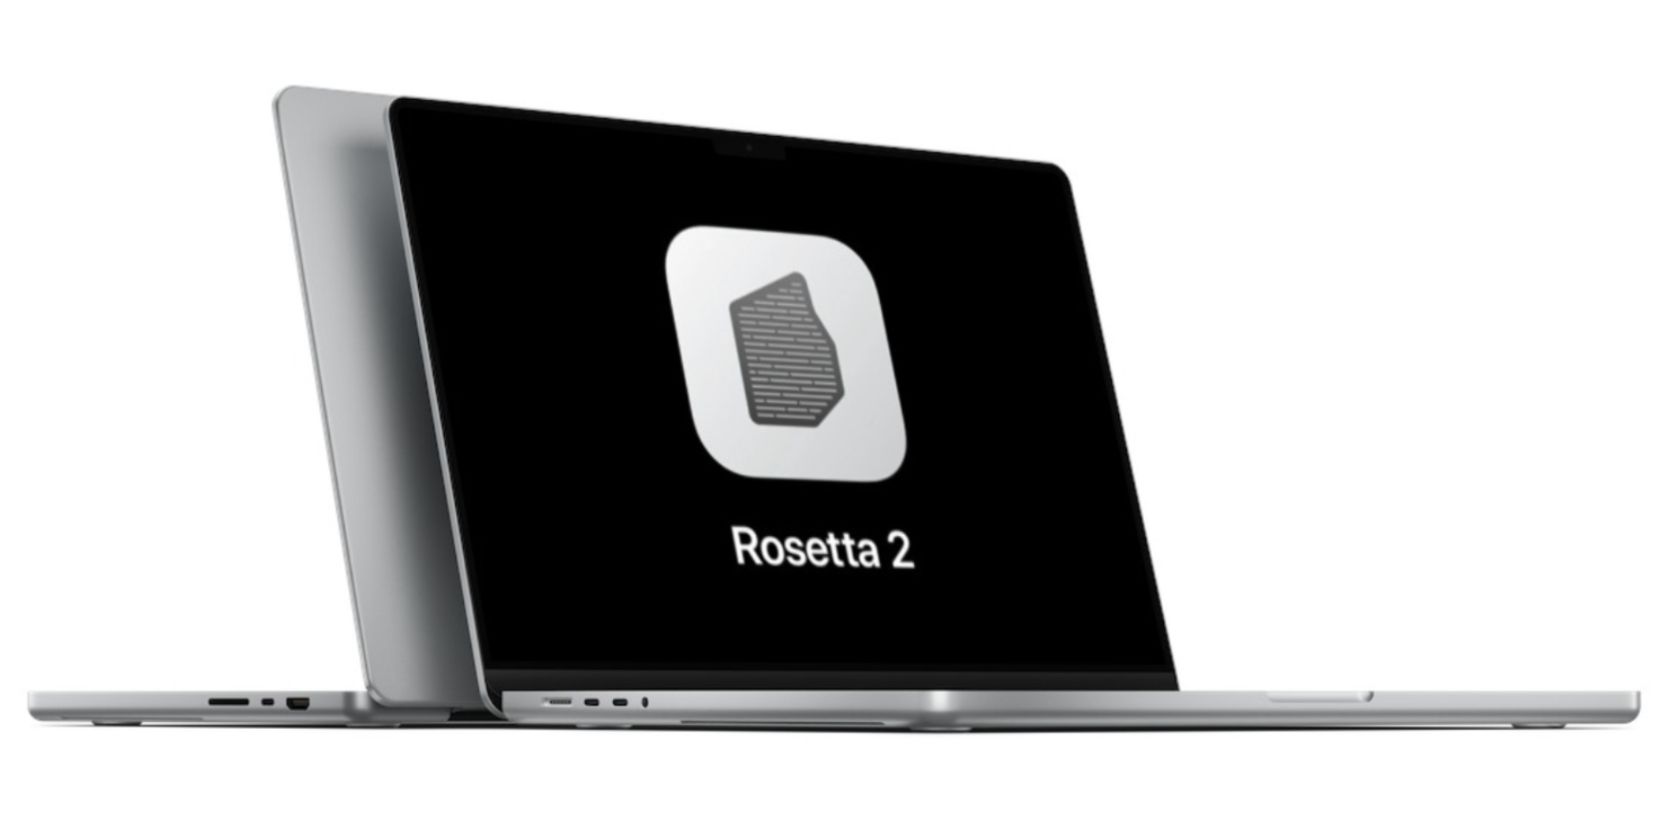 What Is Rosetta 2 On Mac